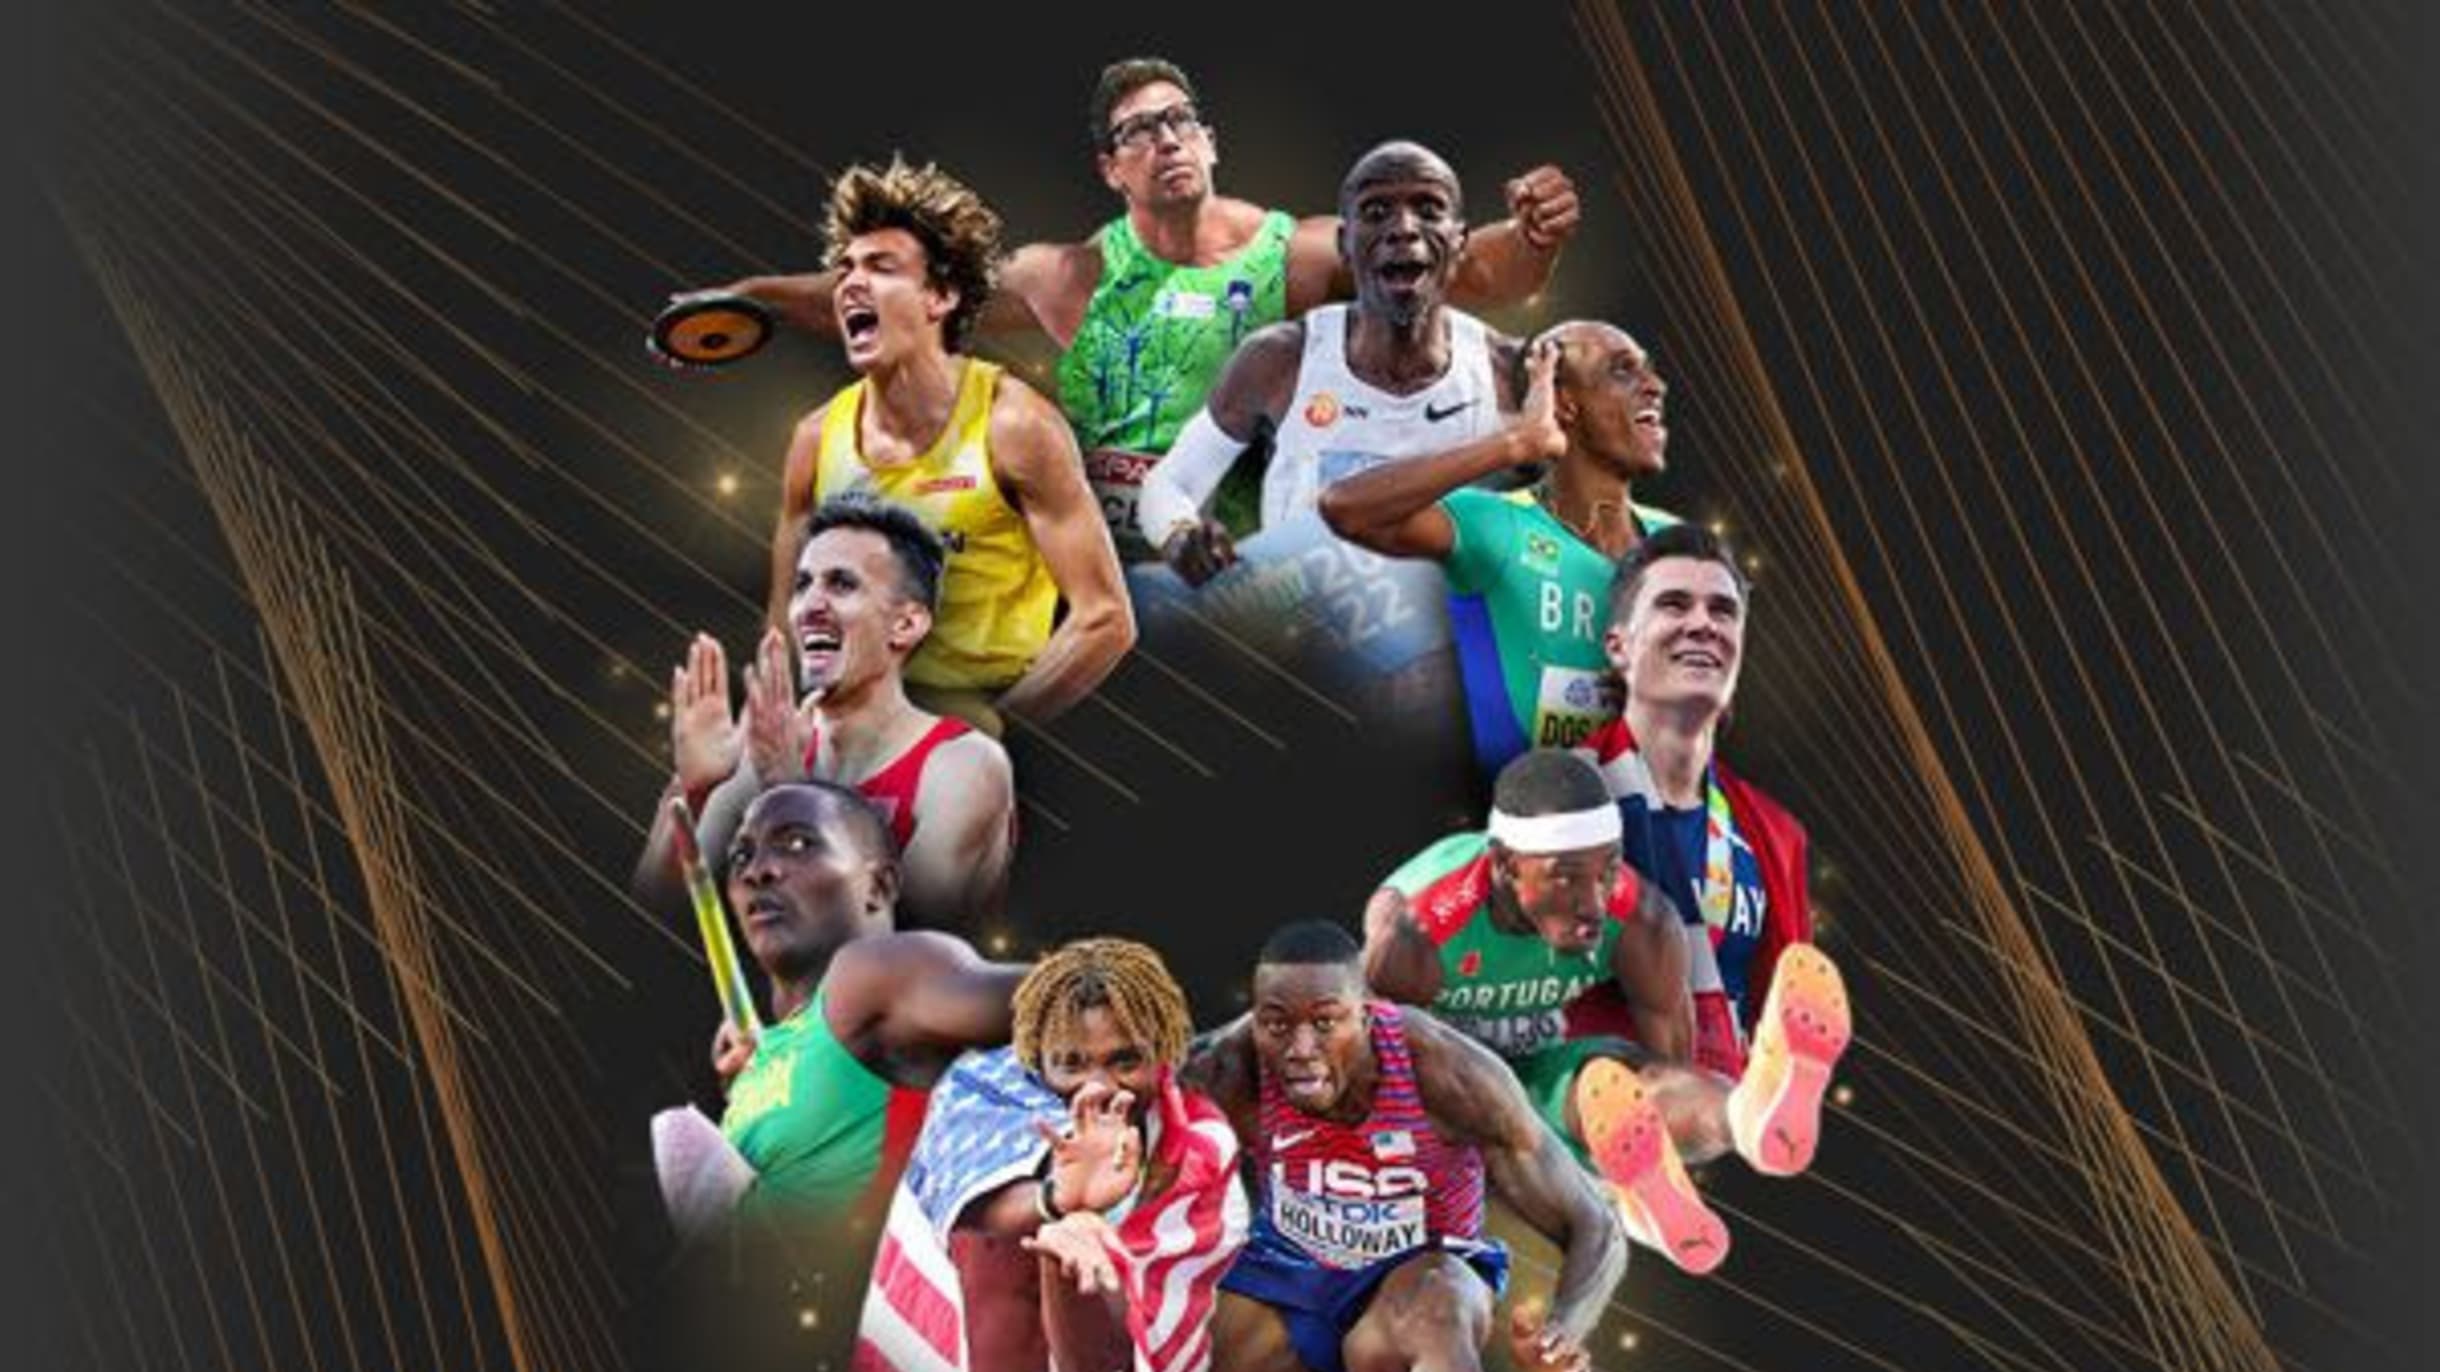 2022 Awards winners so far  World Athletics Awards 2022 